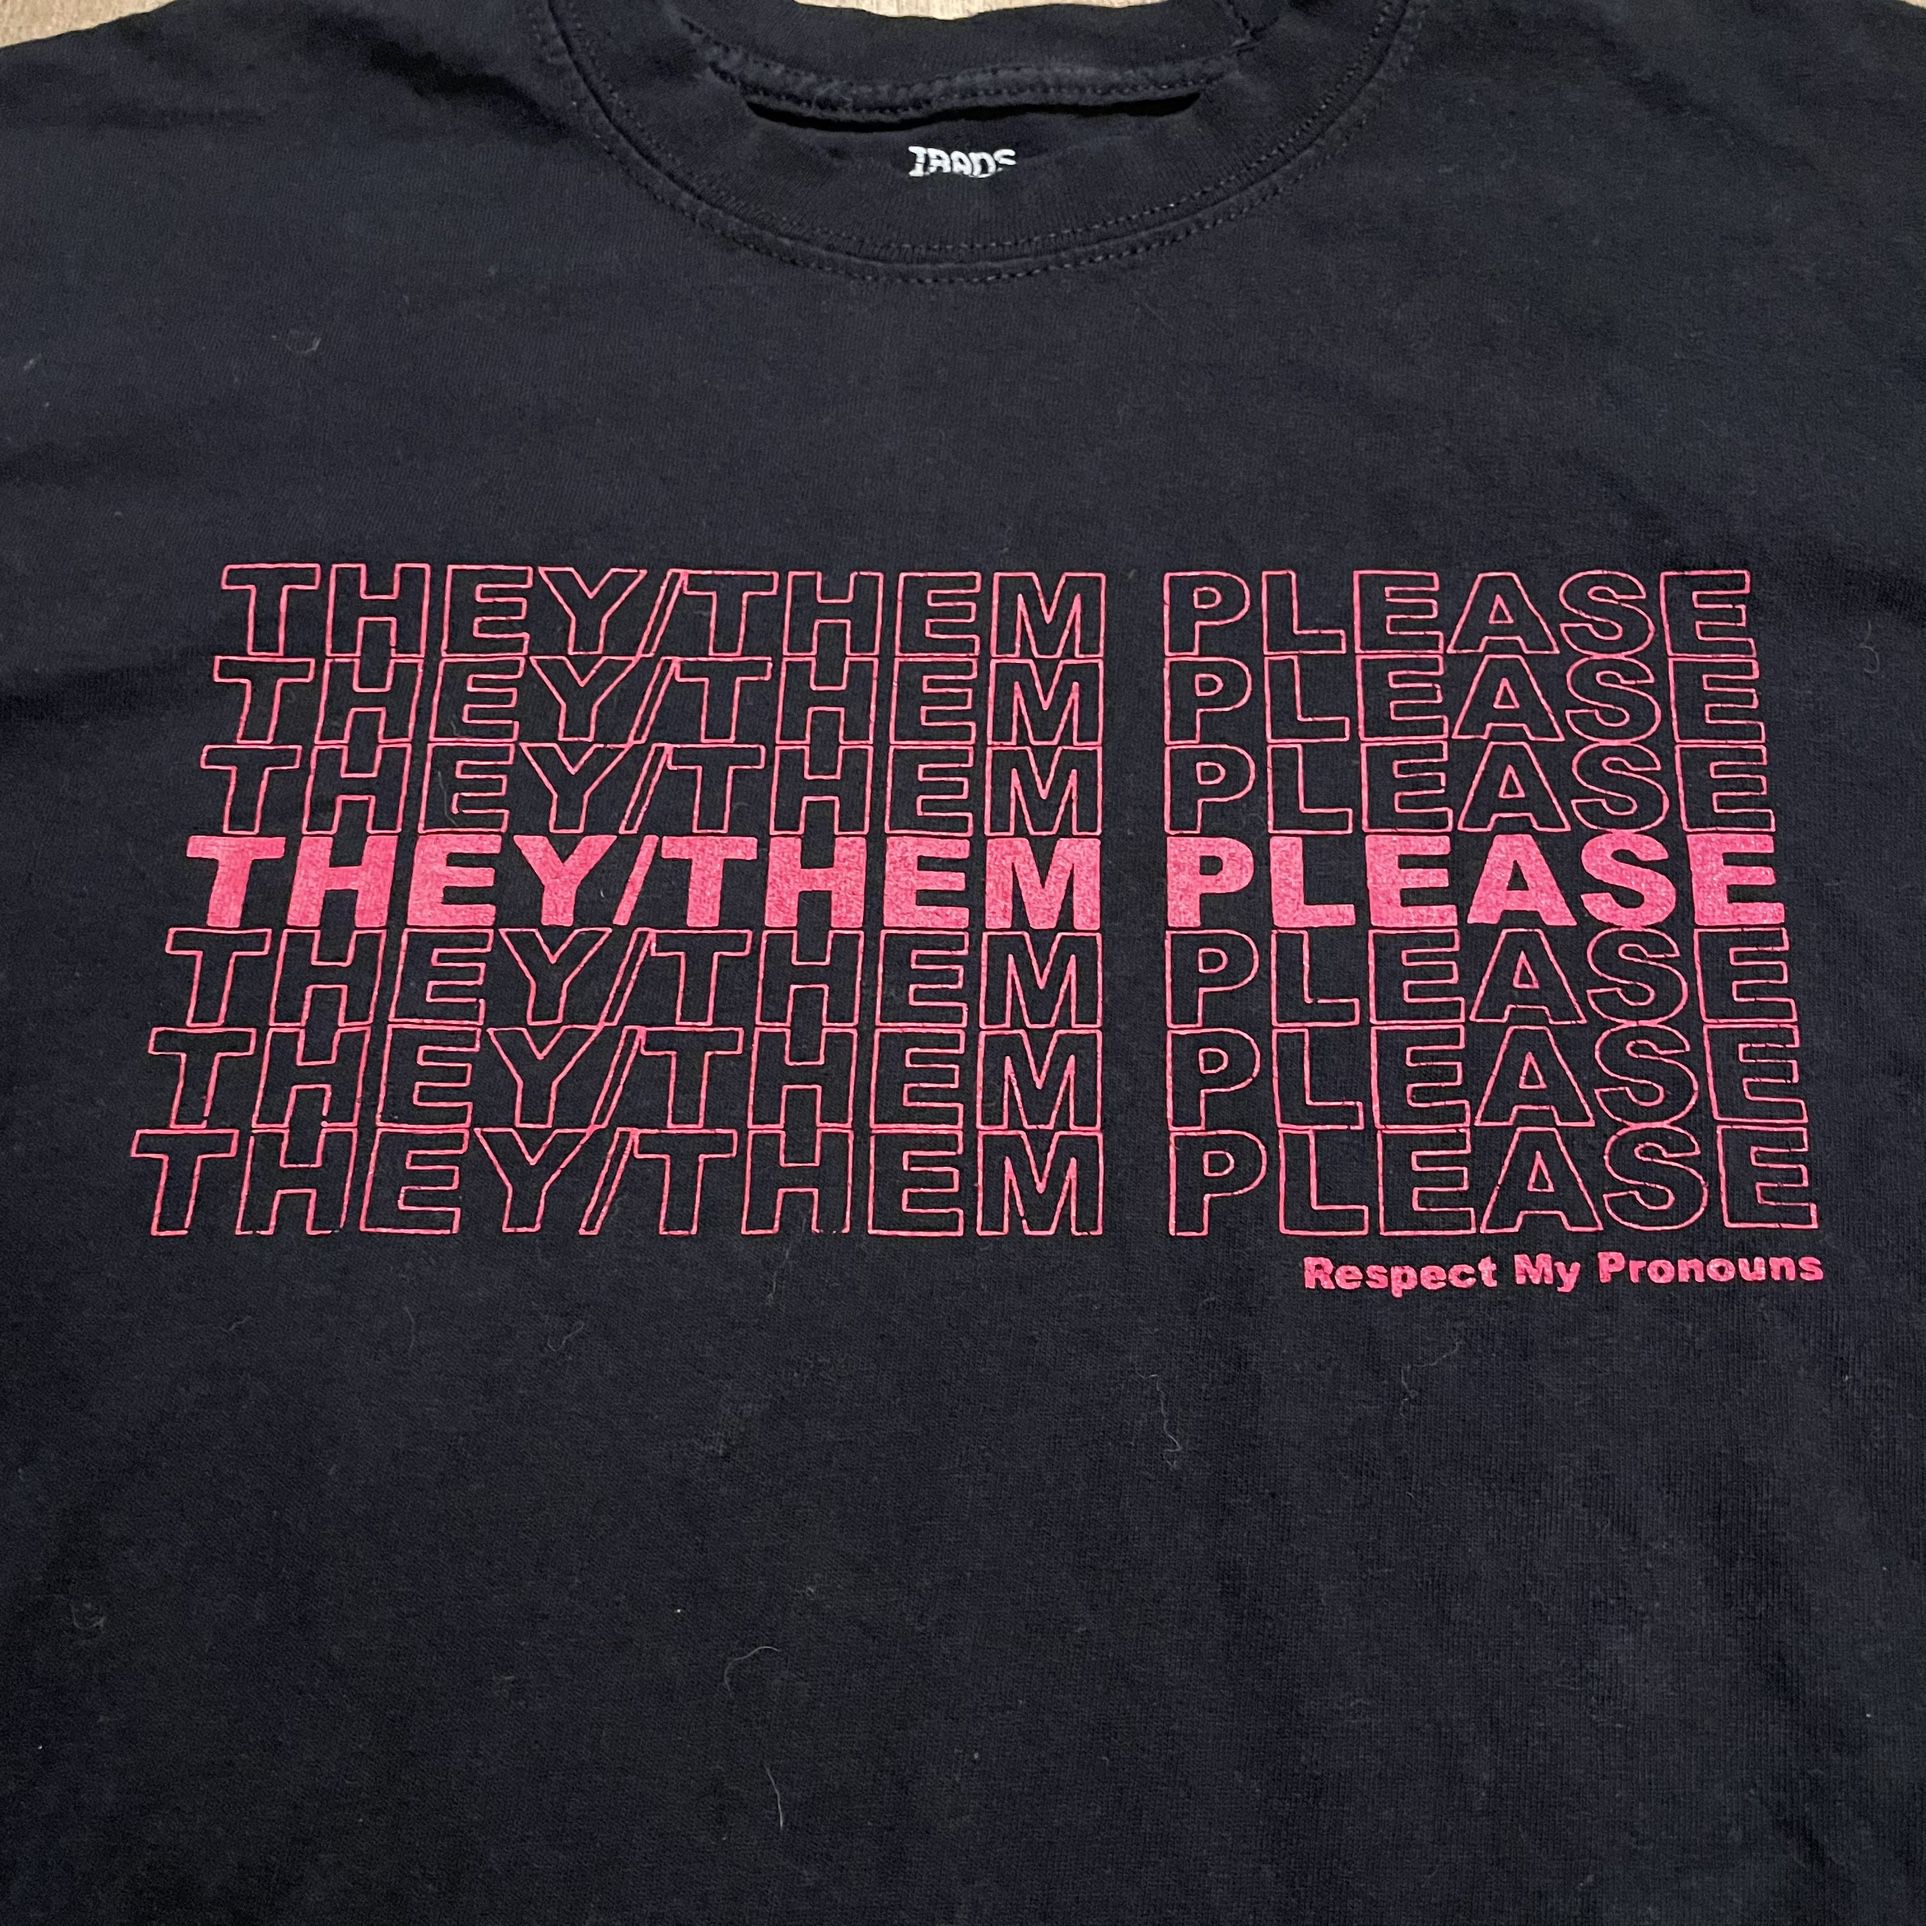 They/Them Please Transfigure T-shirt